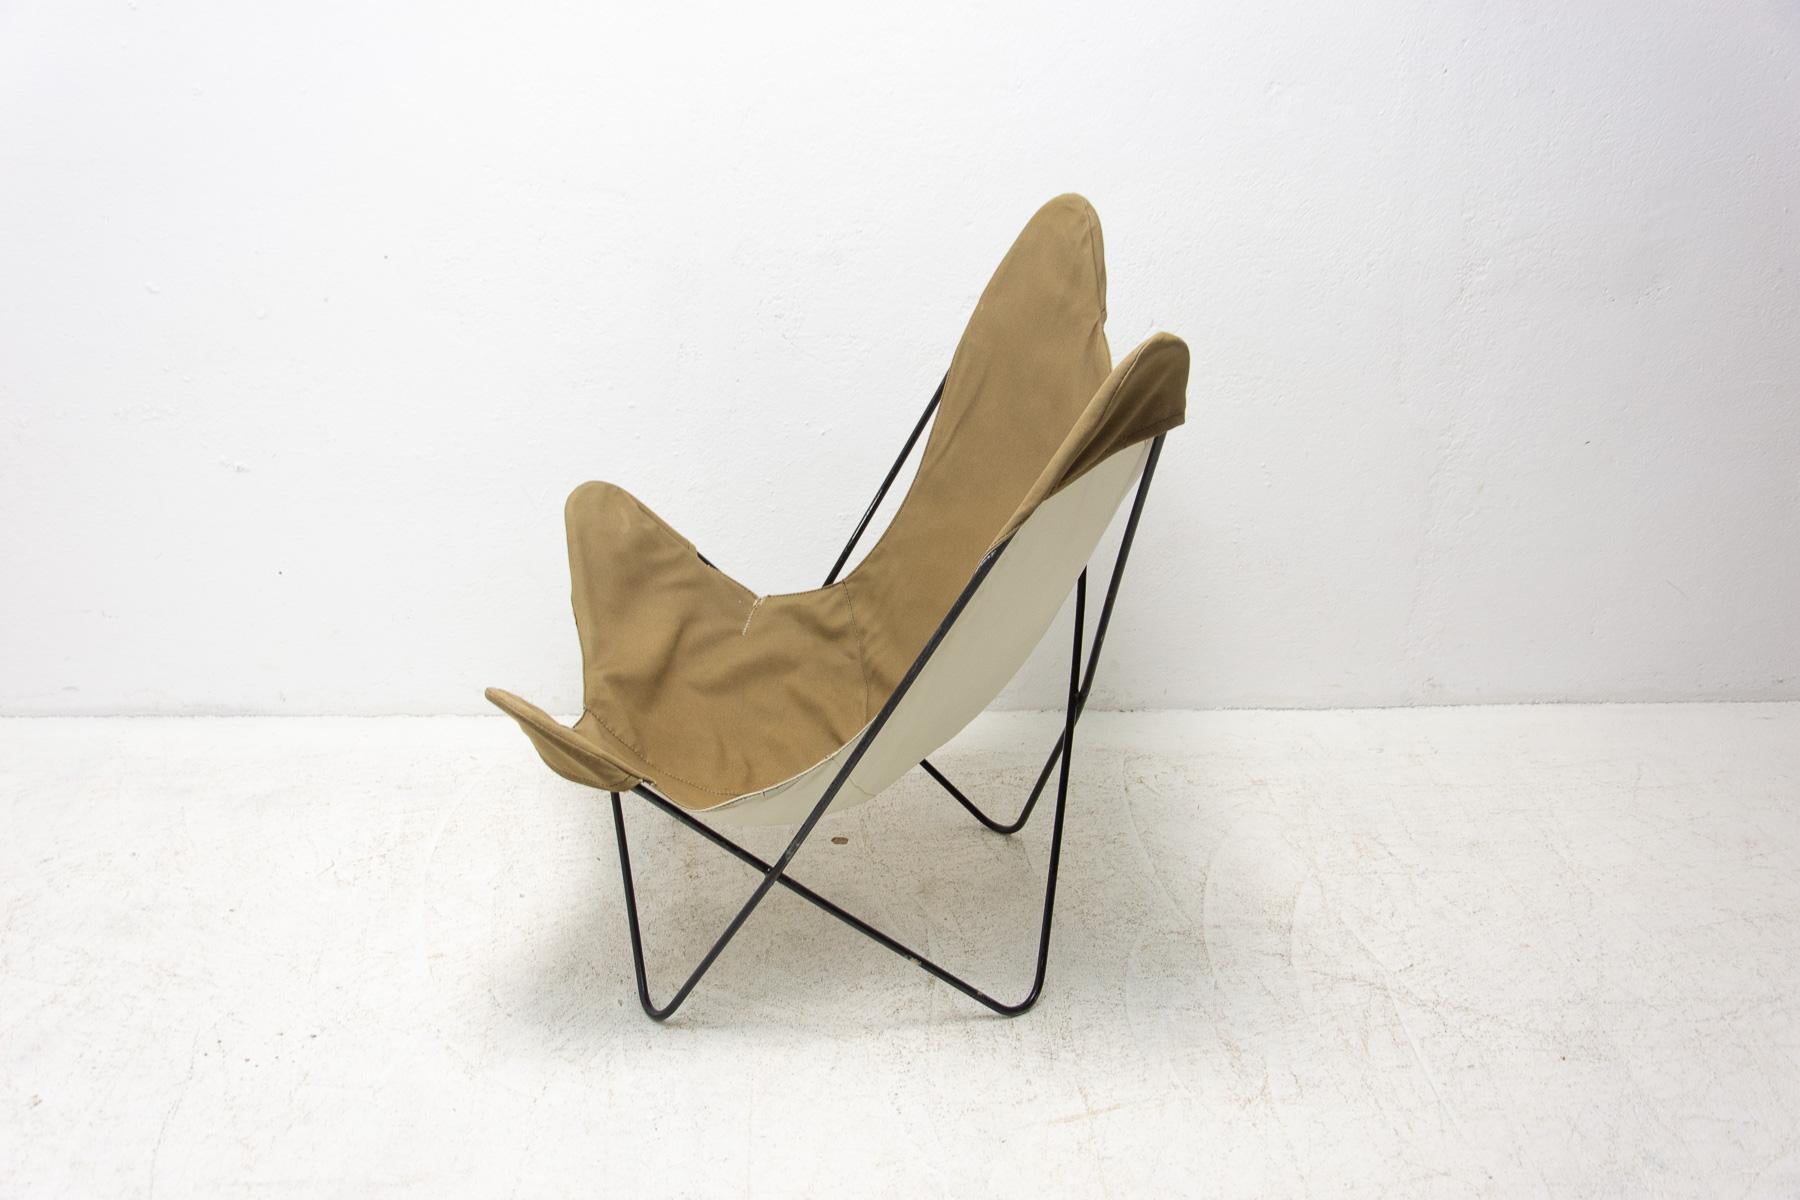 20th Century Sculptural Butterfly Chair Originaly Designed by Jorge Ferrari-Hardoy